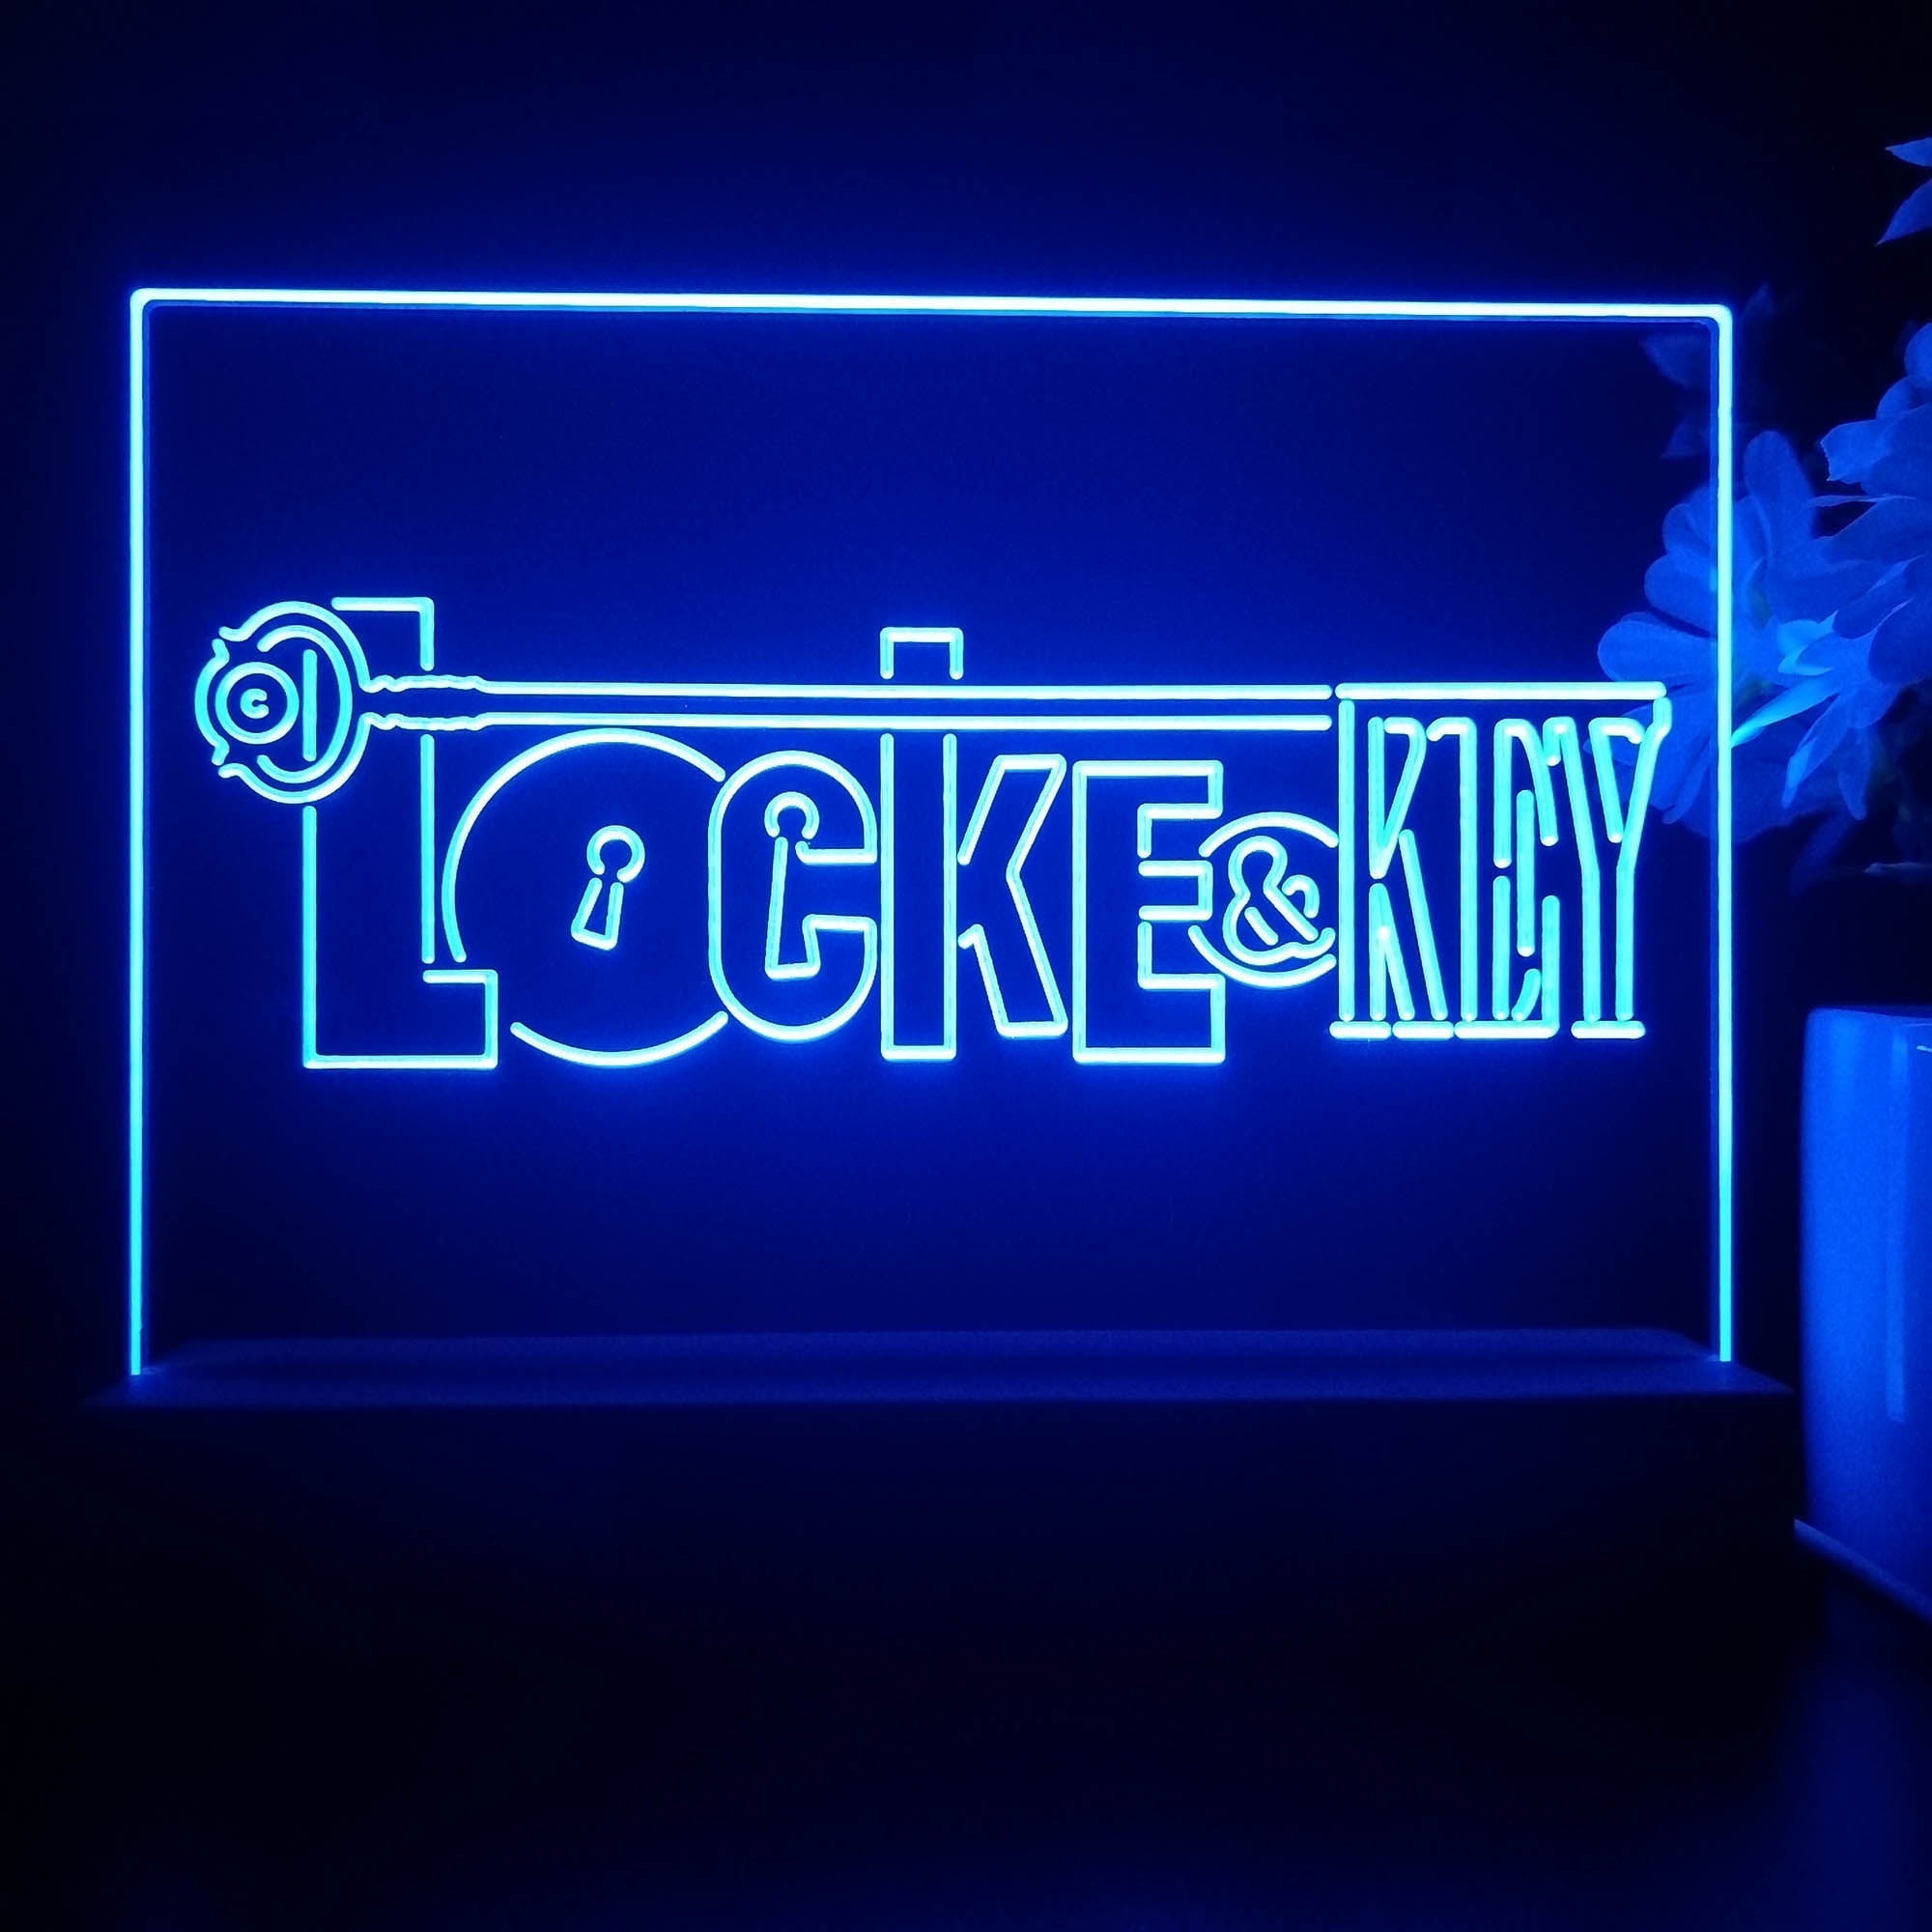 Locke & Key 3D Illusion Night Light Desk Lamp